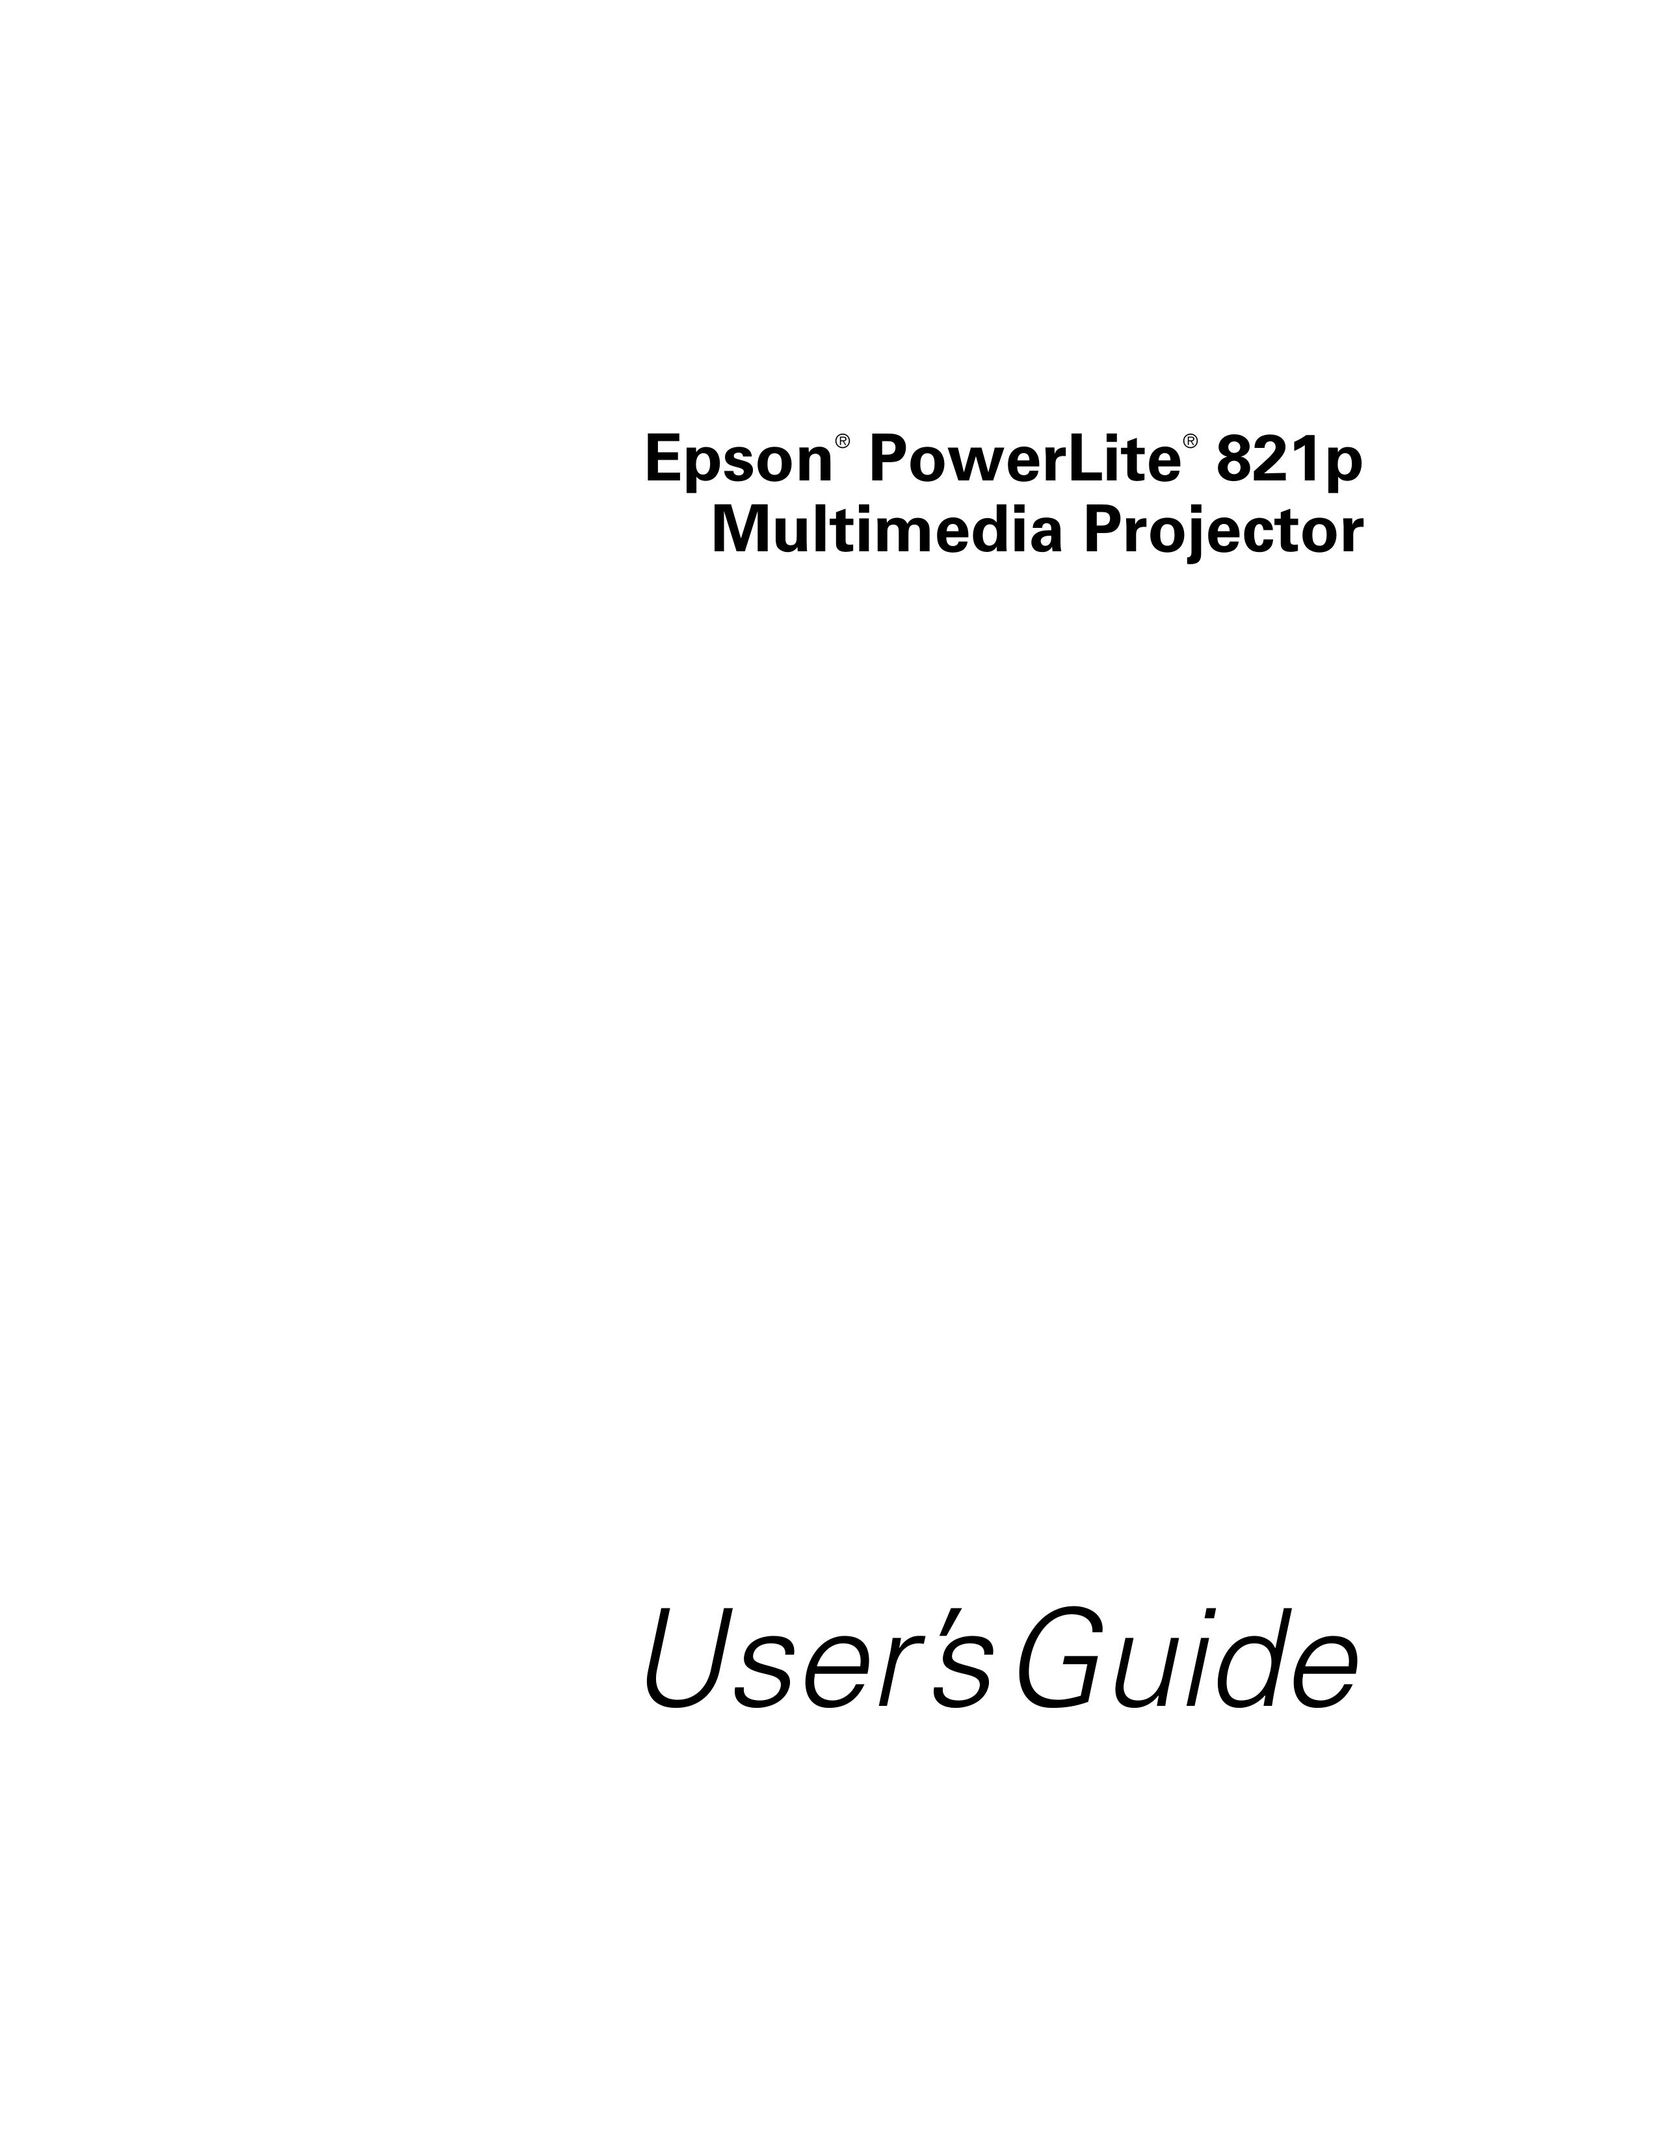 Garmin 821P Projector User Manual